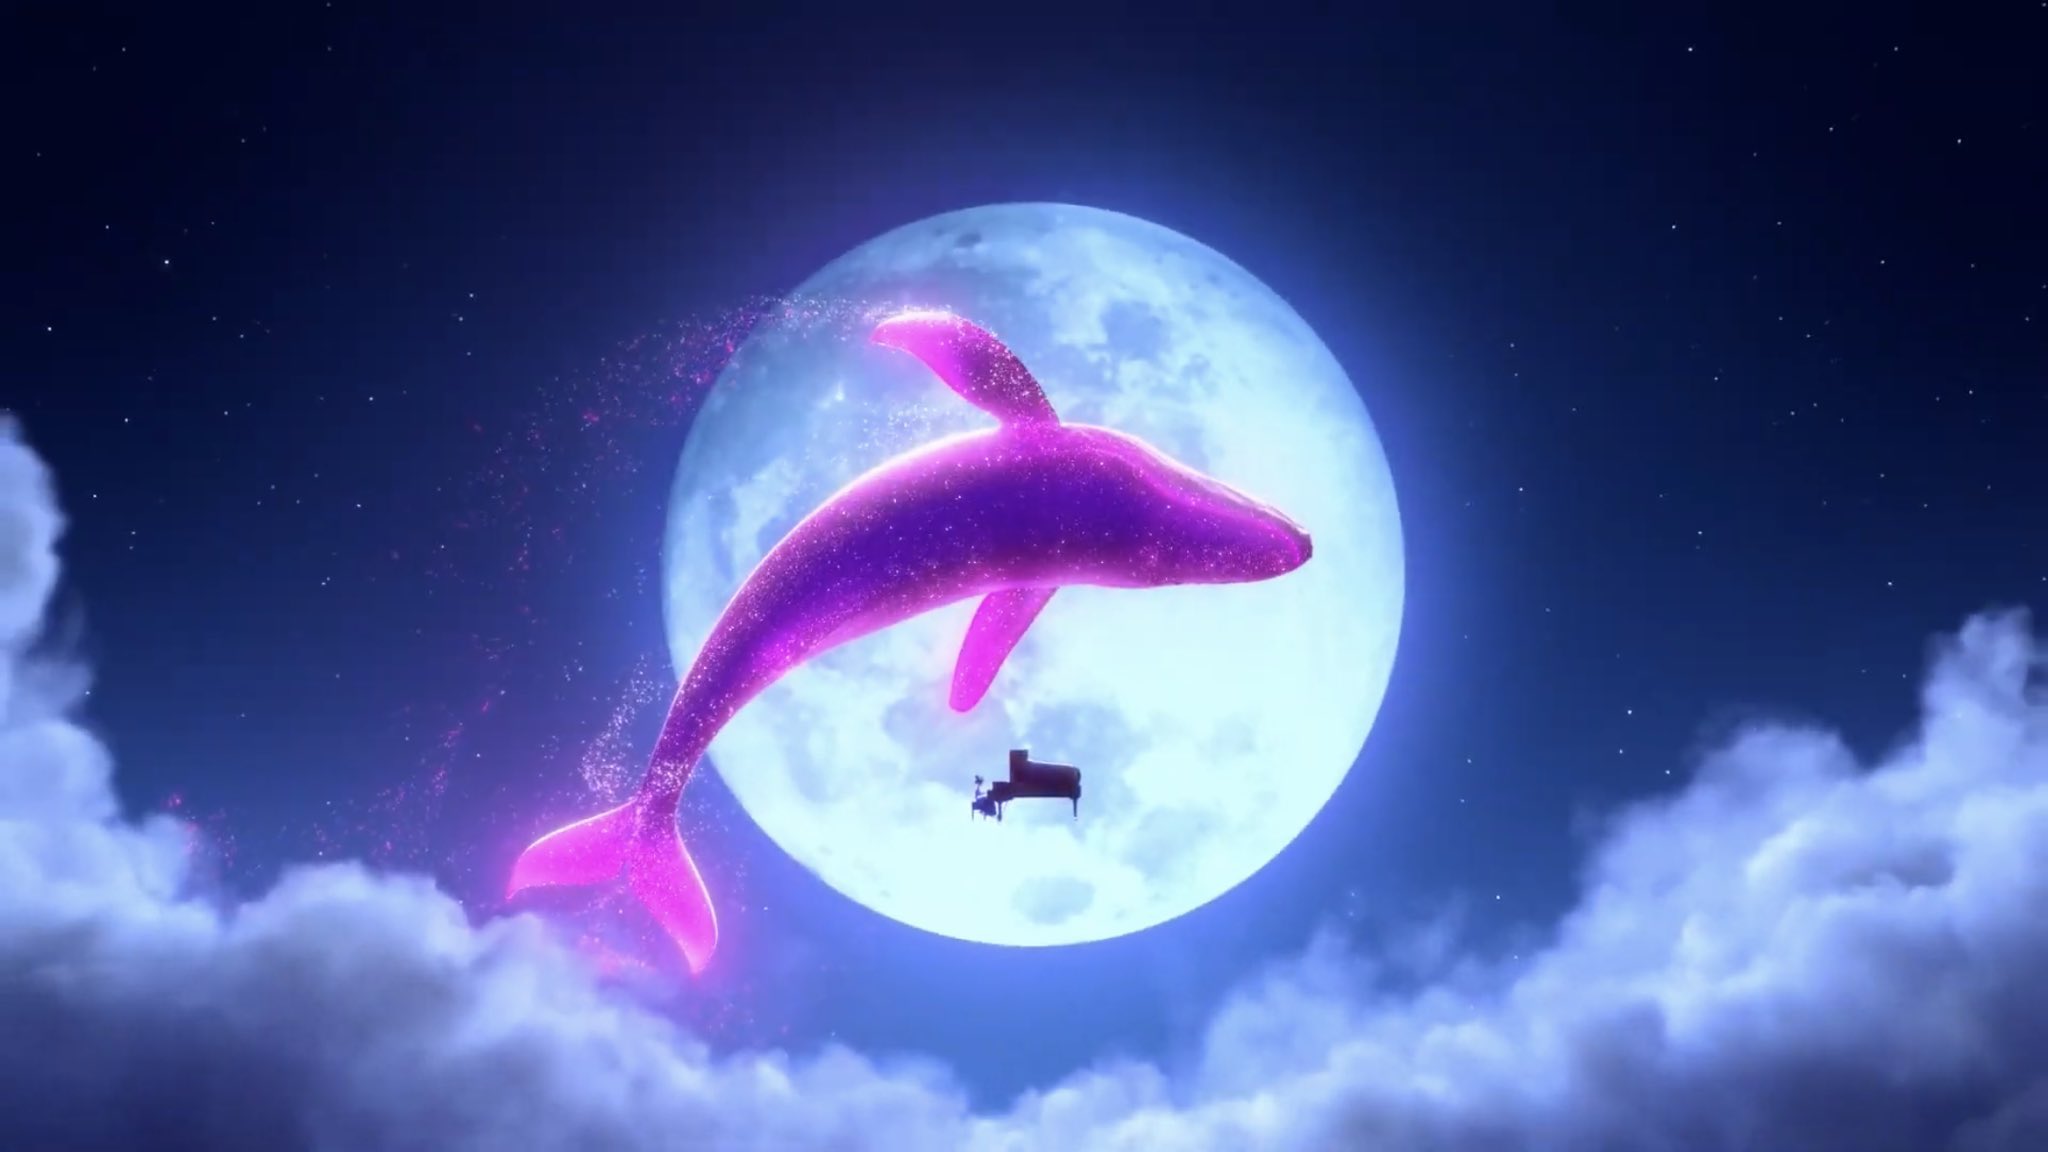 ◡̈ purple whale will always symbolizes Armys